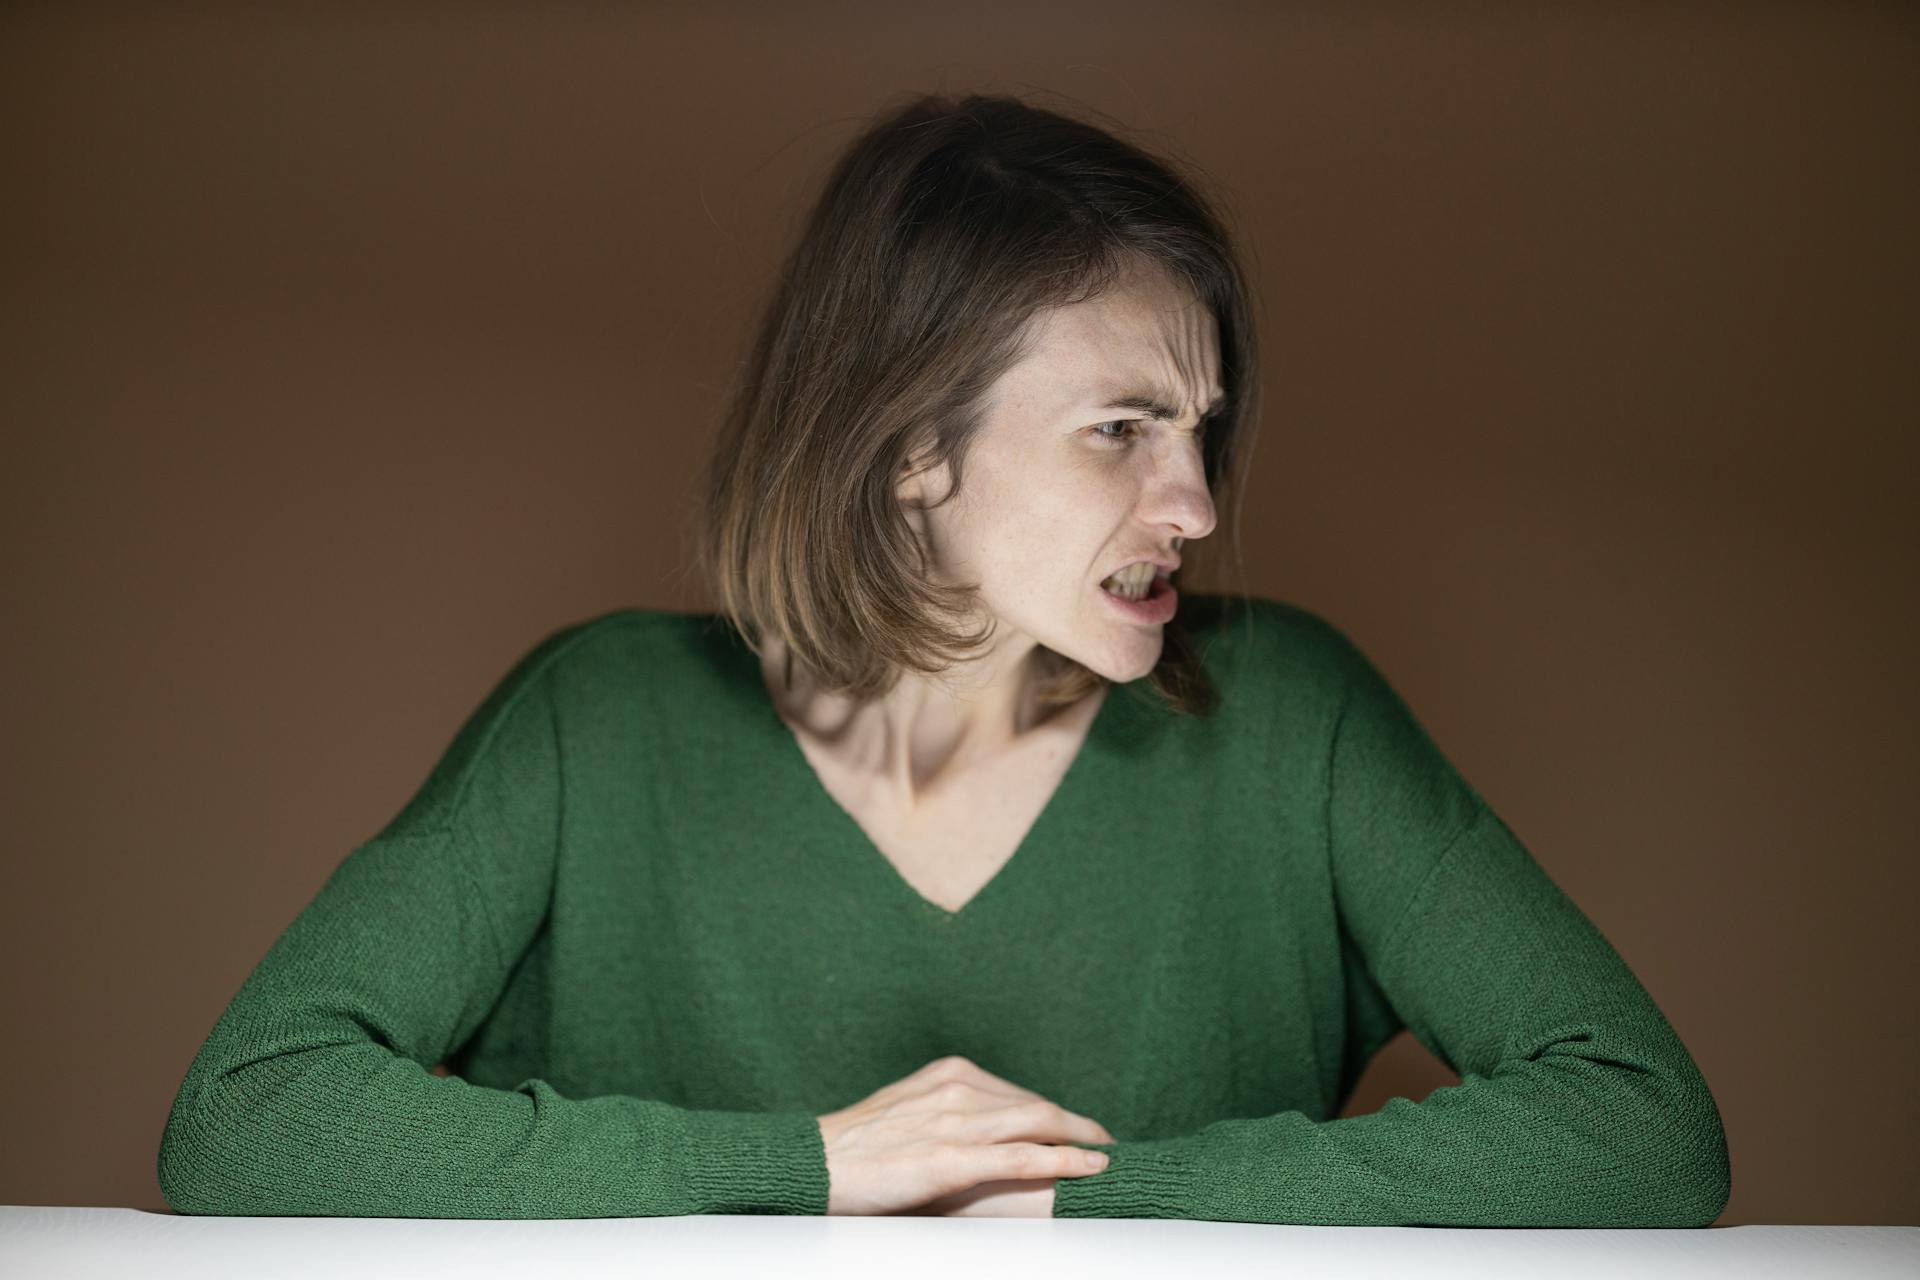 A furious mature woman arguing | Source: Pexels